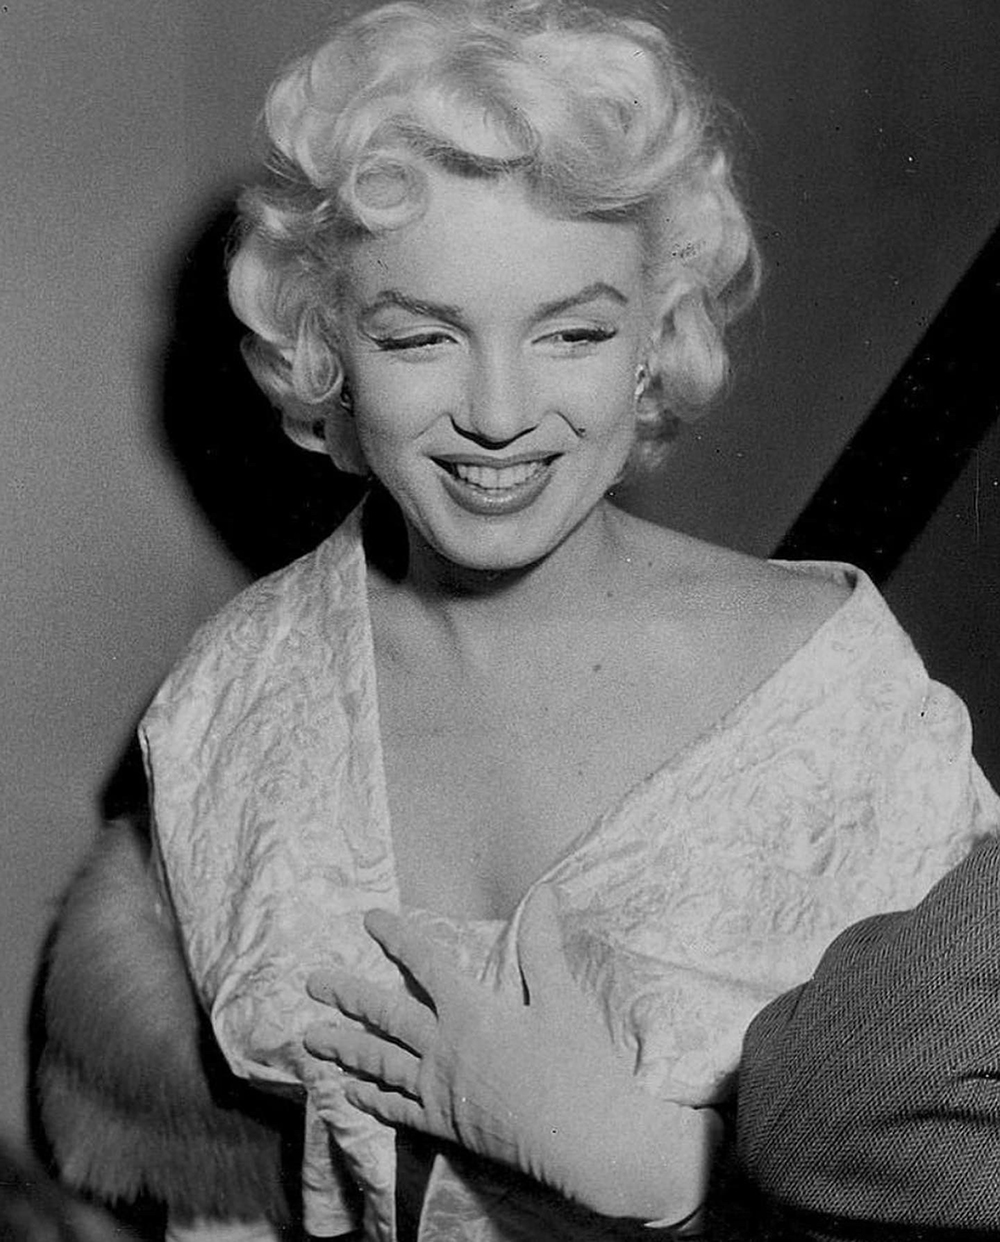 Marilyn Monroe Net Worth Before Death: Who Inherited Her Estate?